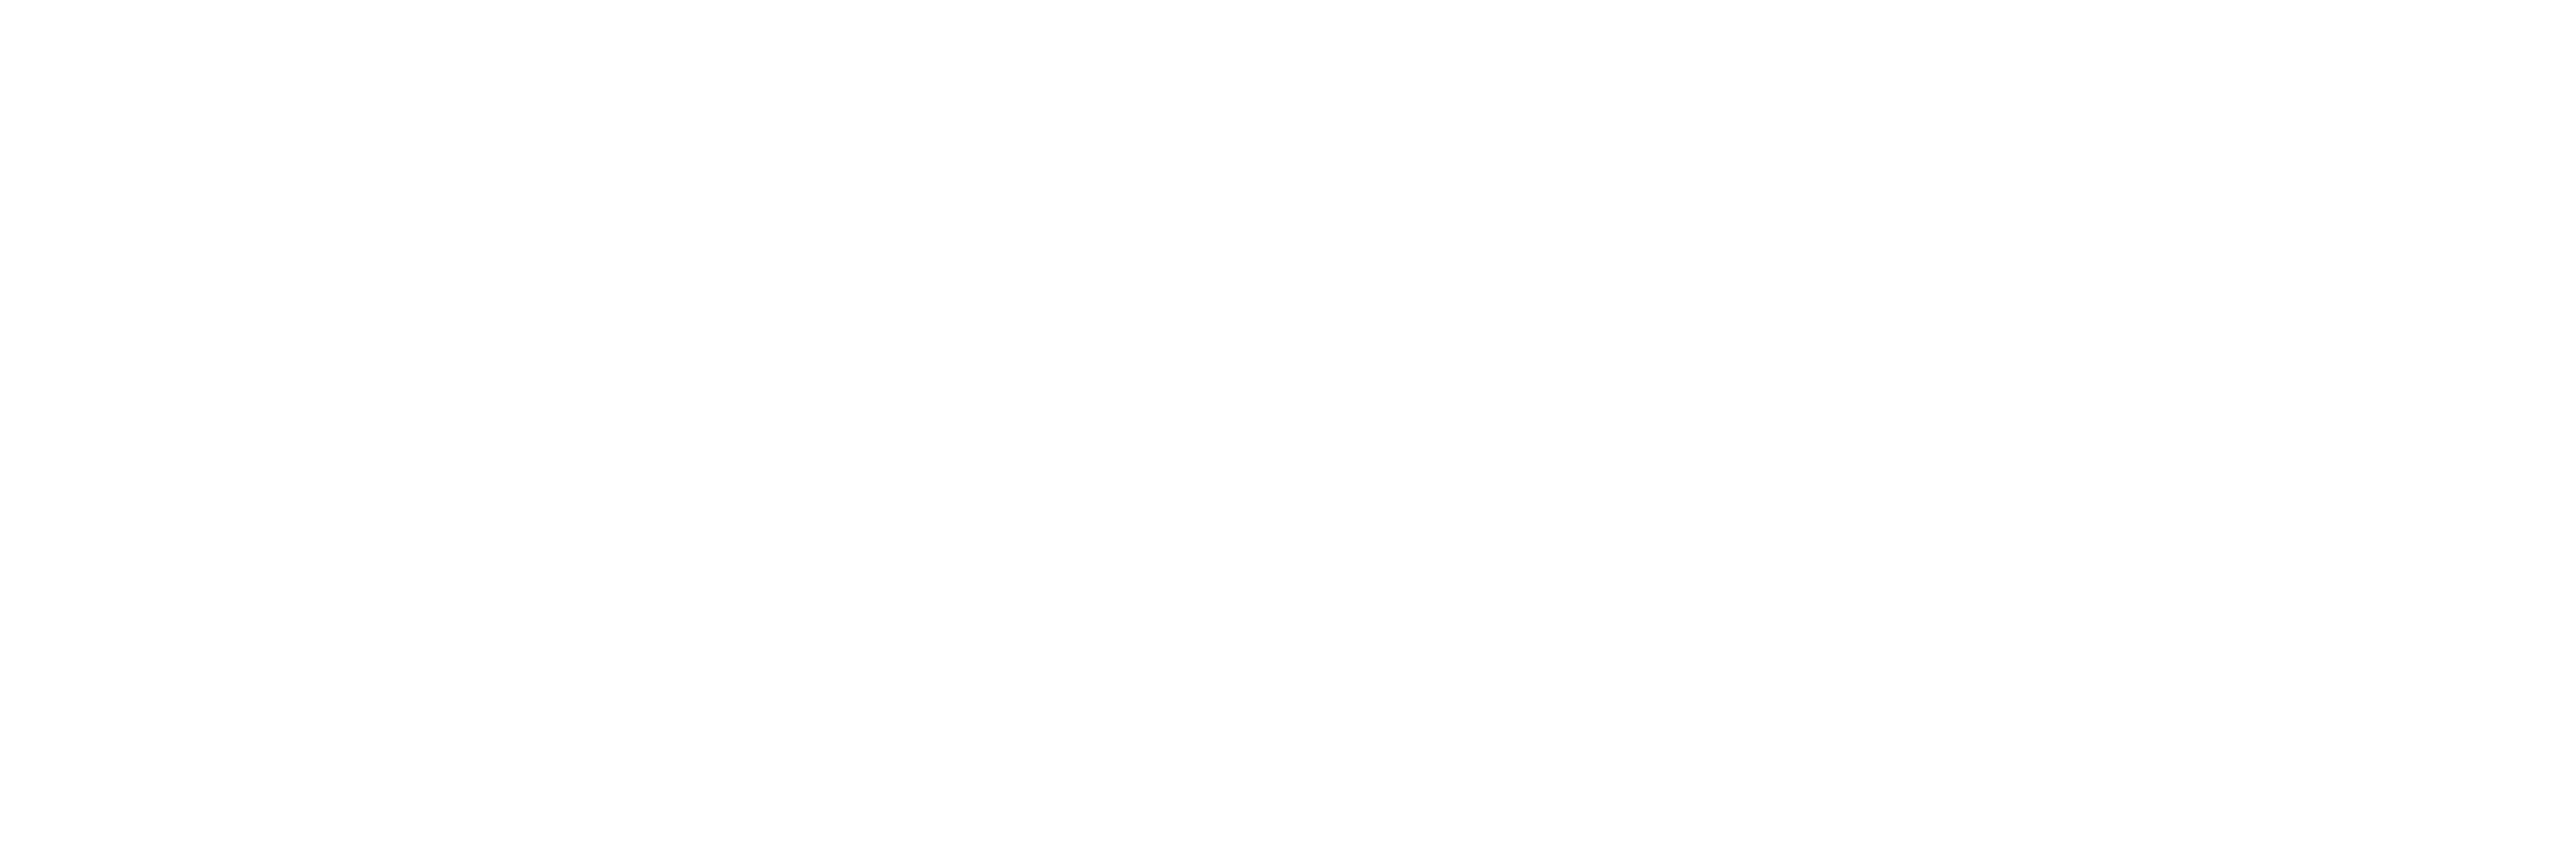 www.gamingplanet.com.co